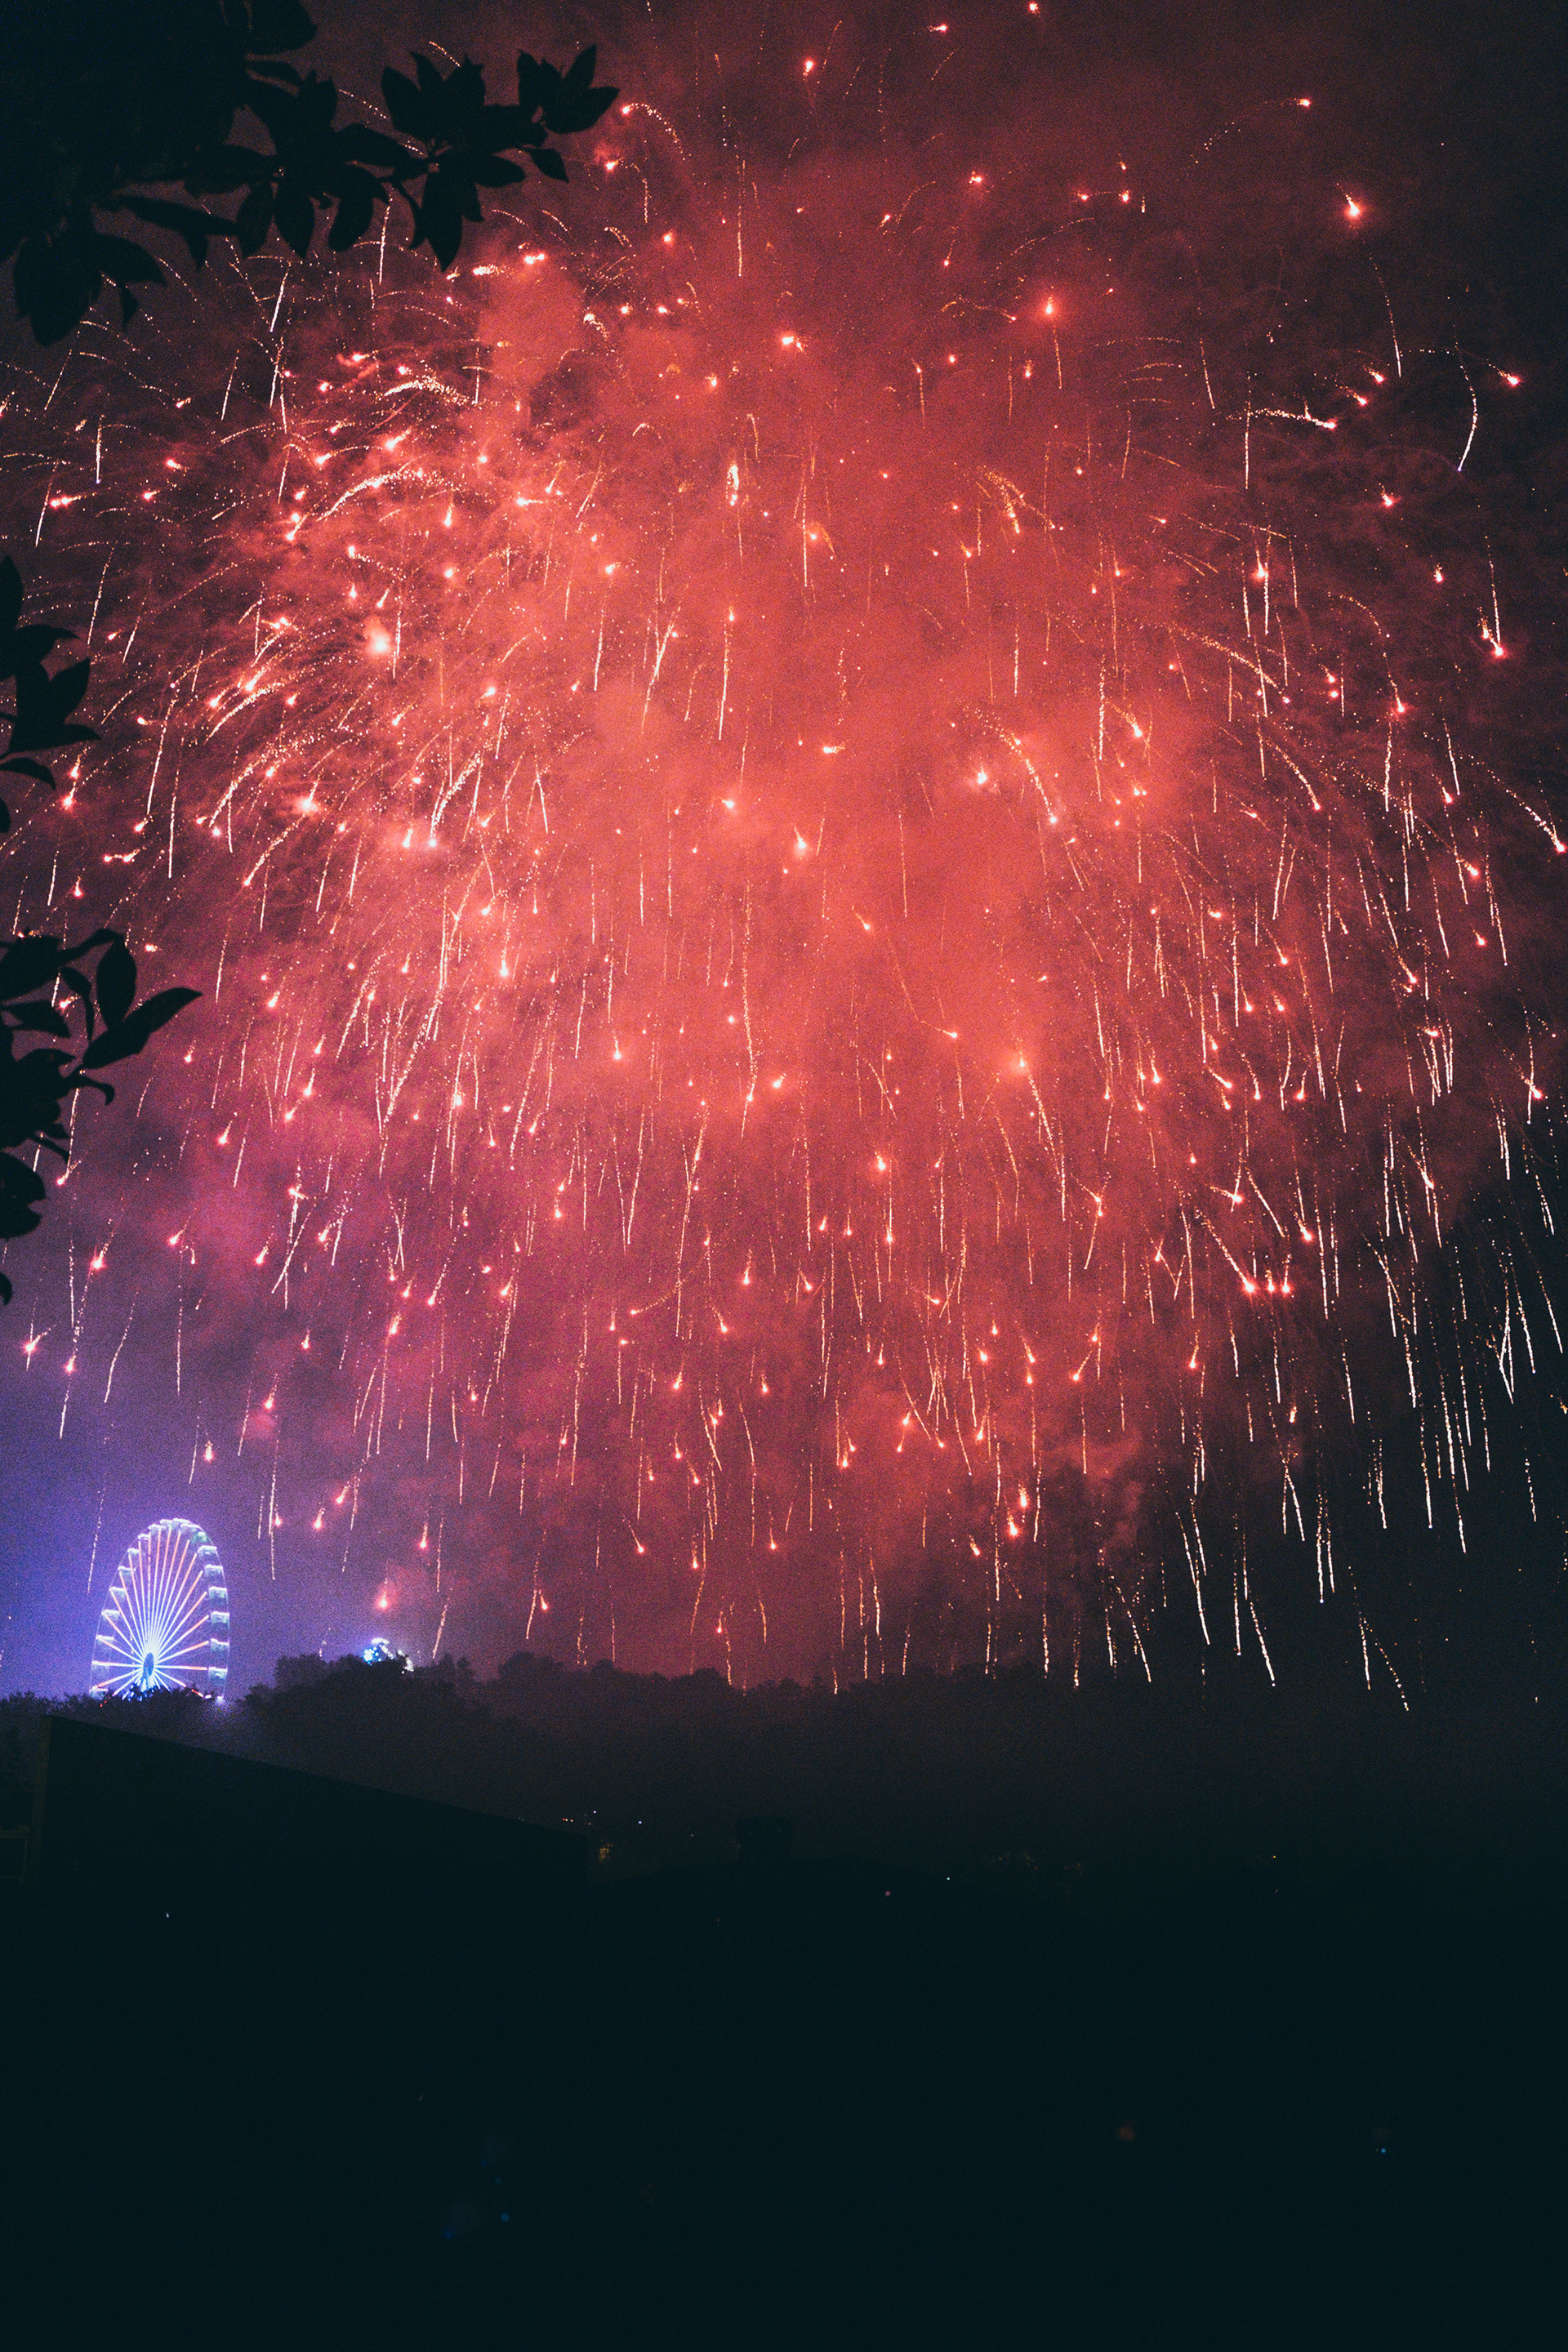 ferris wheel and fireworks
